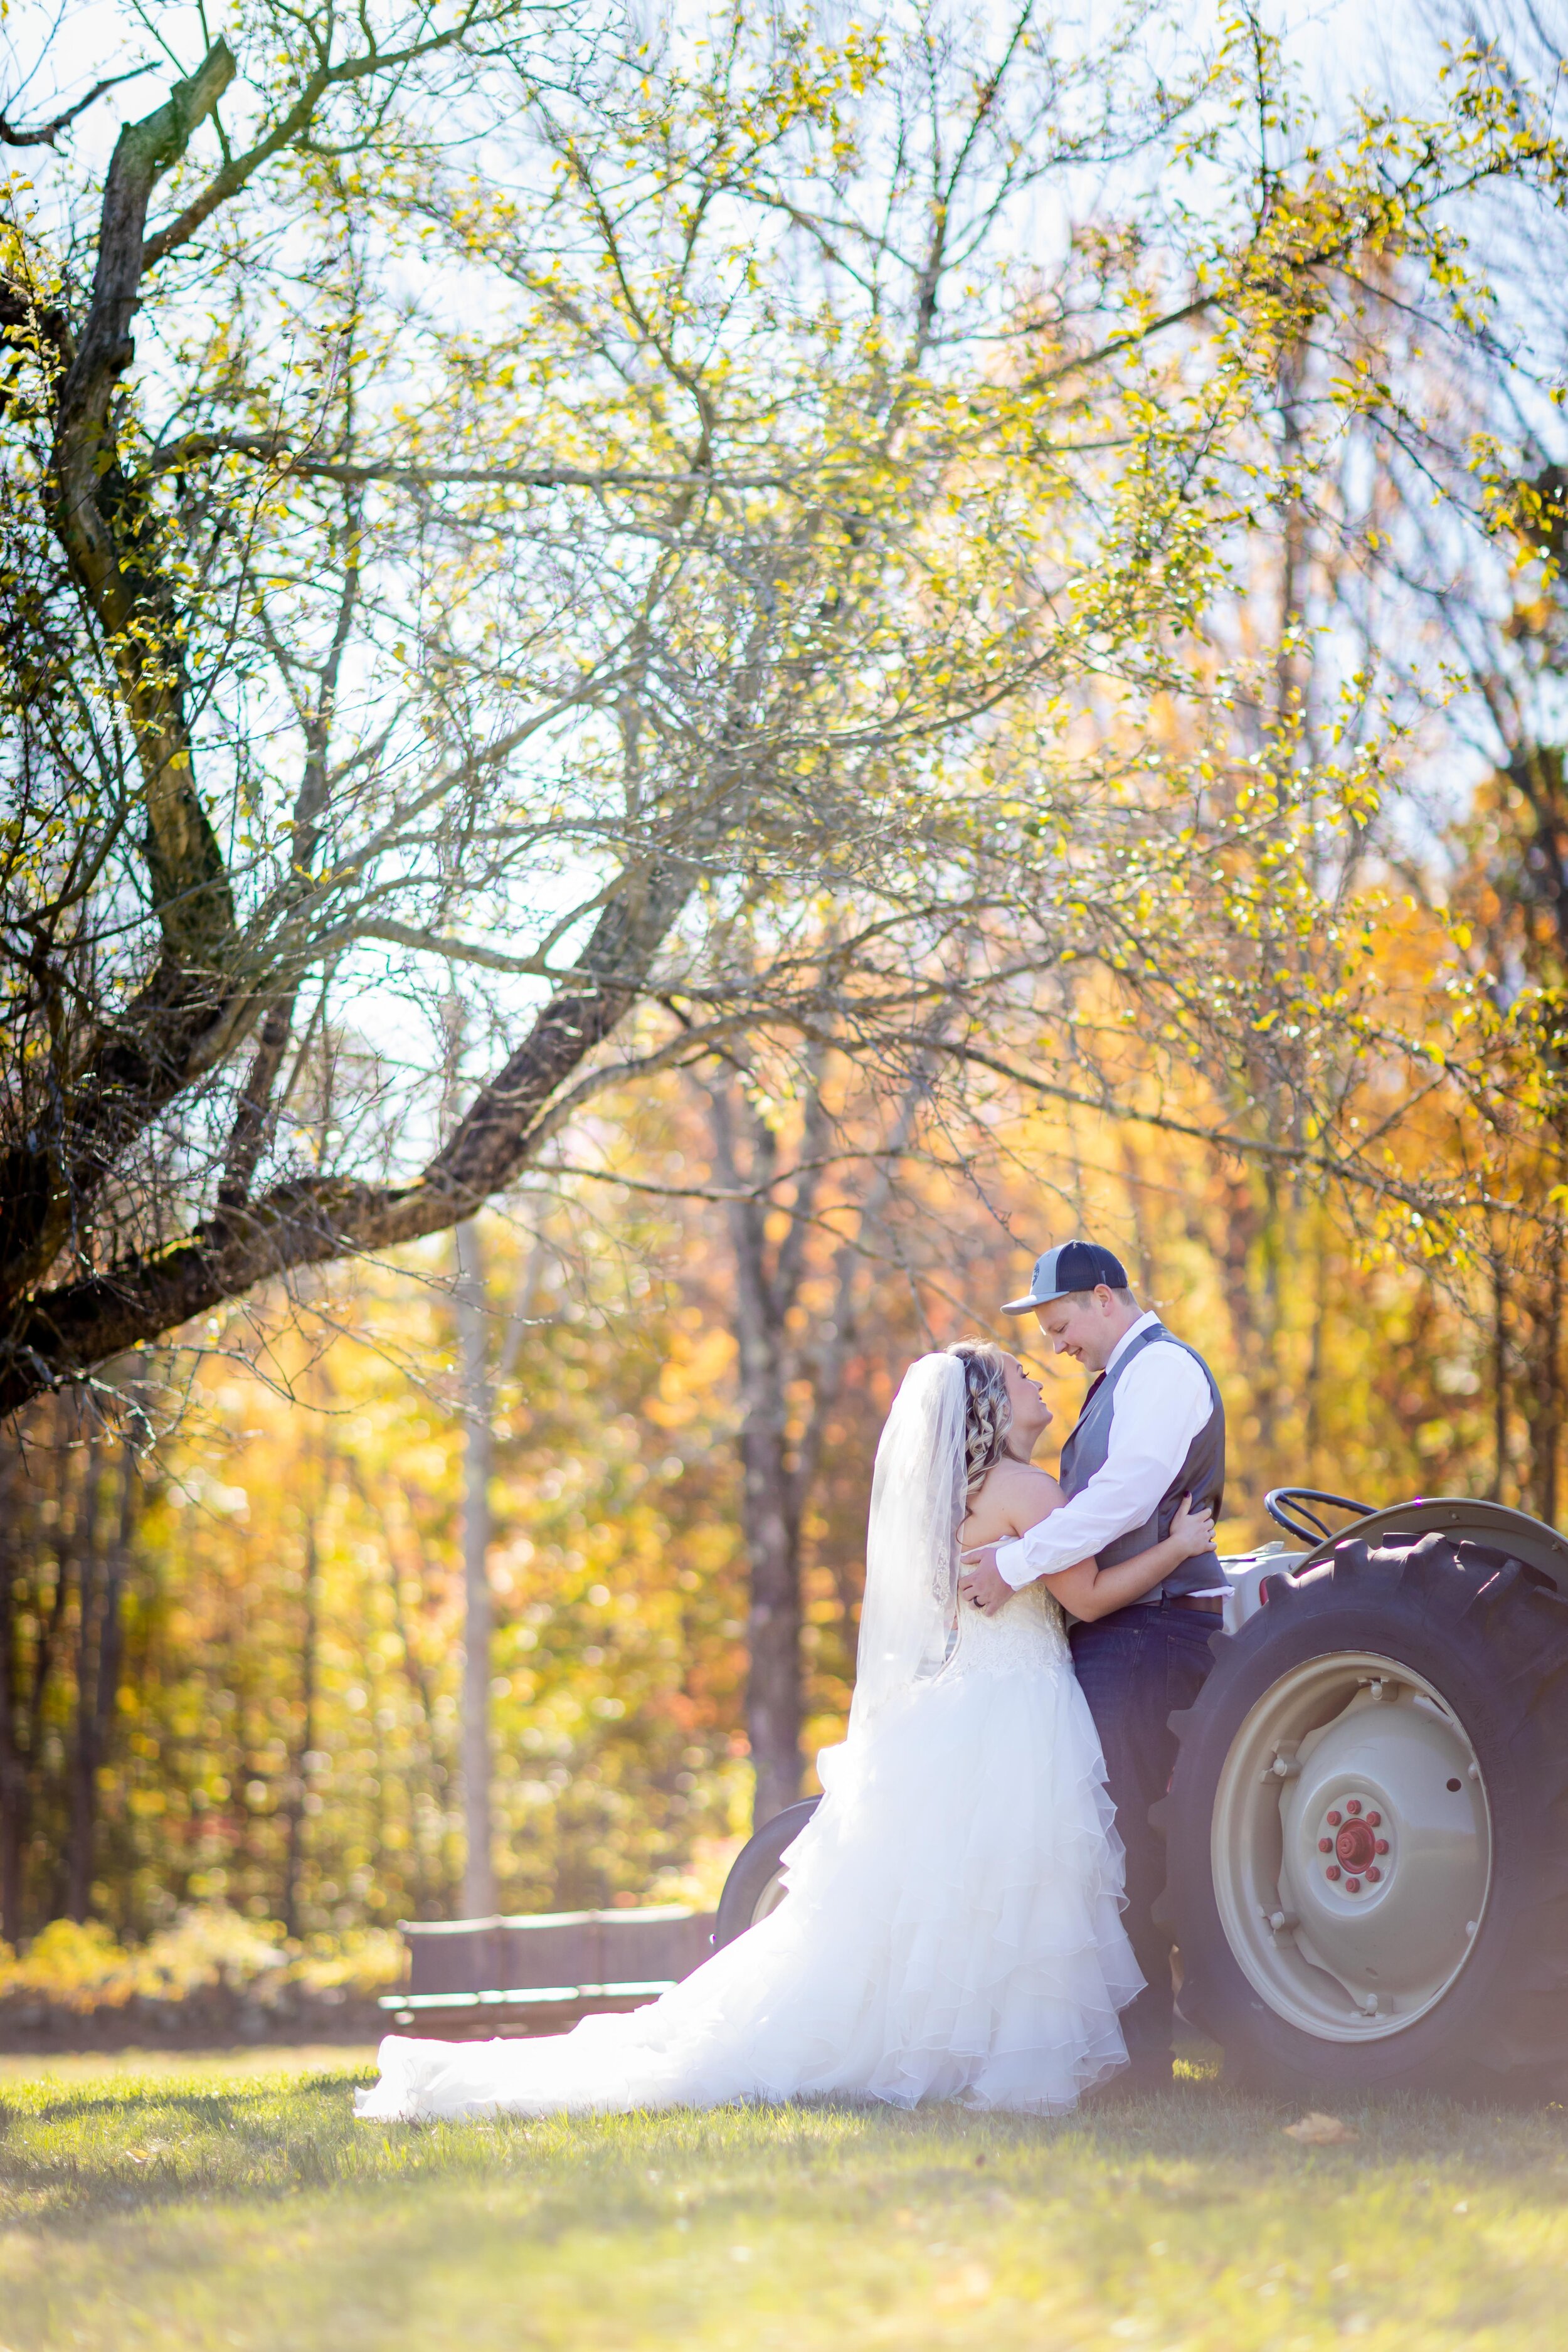 NH Wedding Photography - Jimmy Gray Photo - Lebanon, ME - Private Farmhouse Wedding